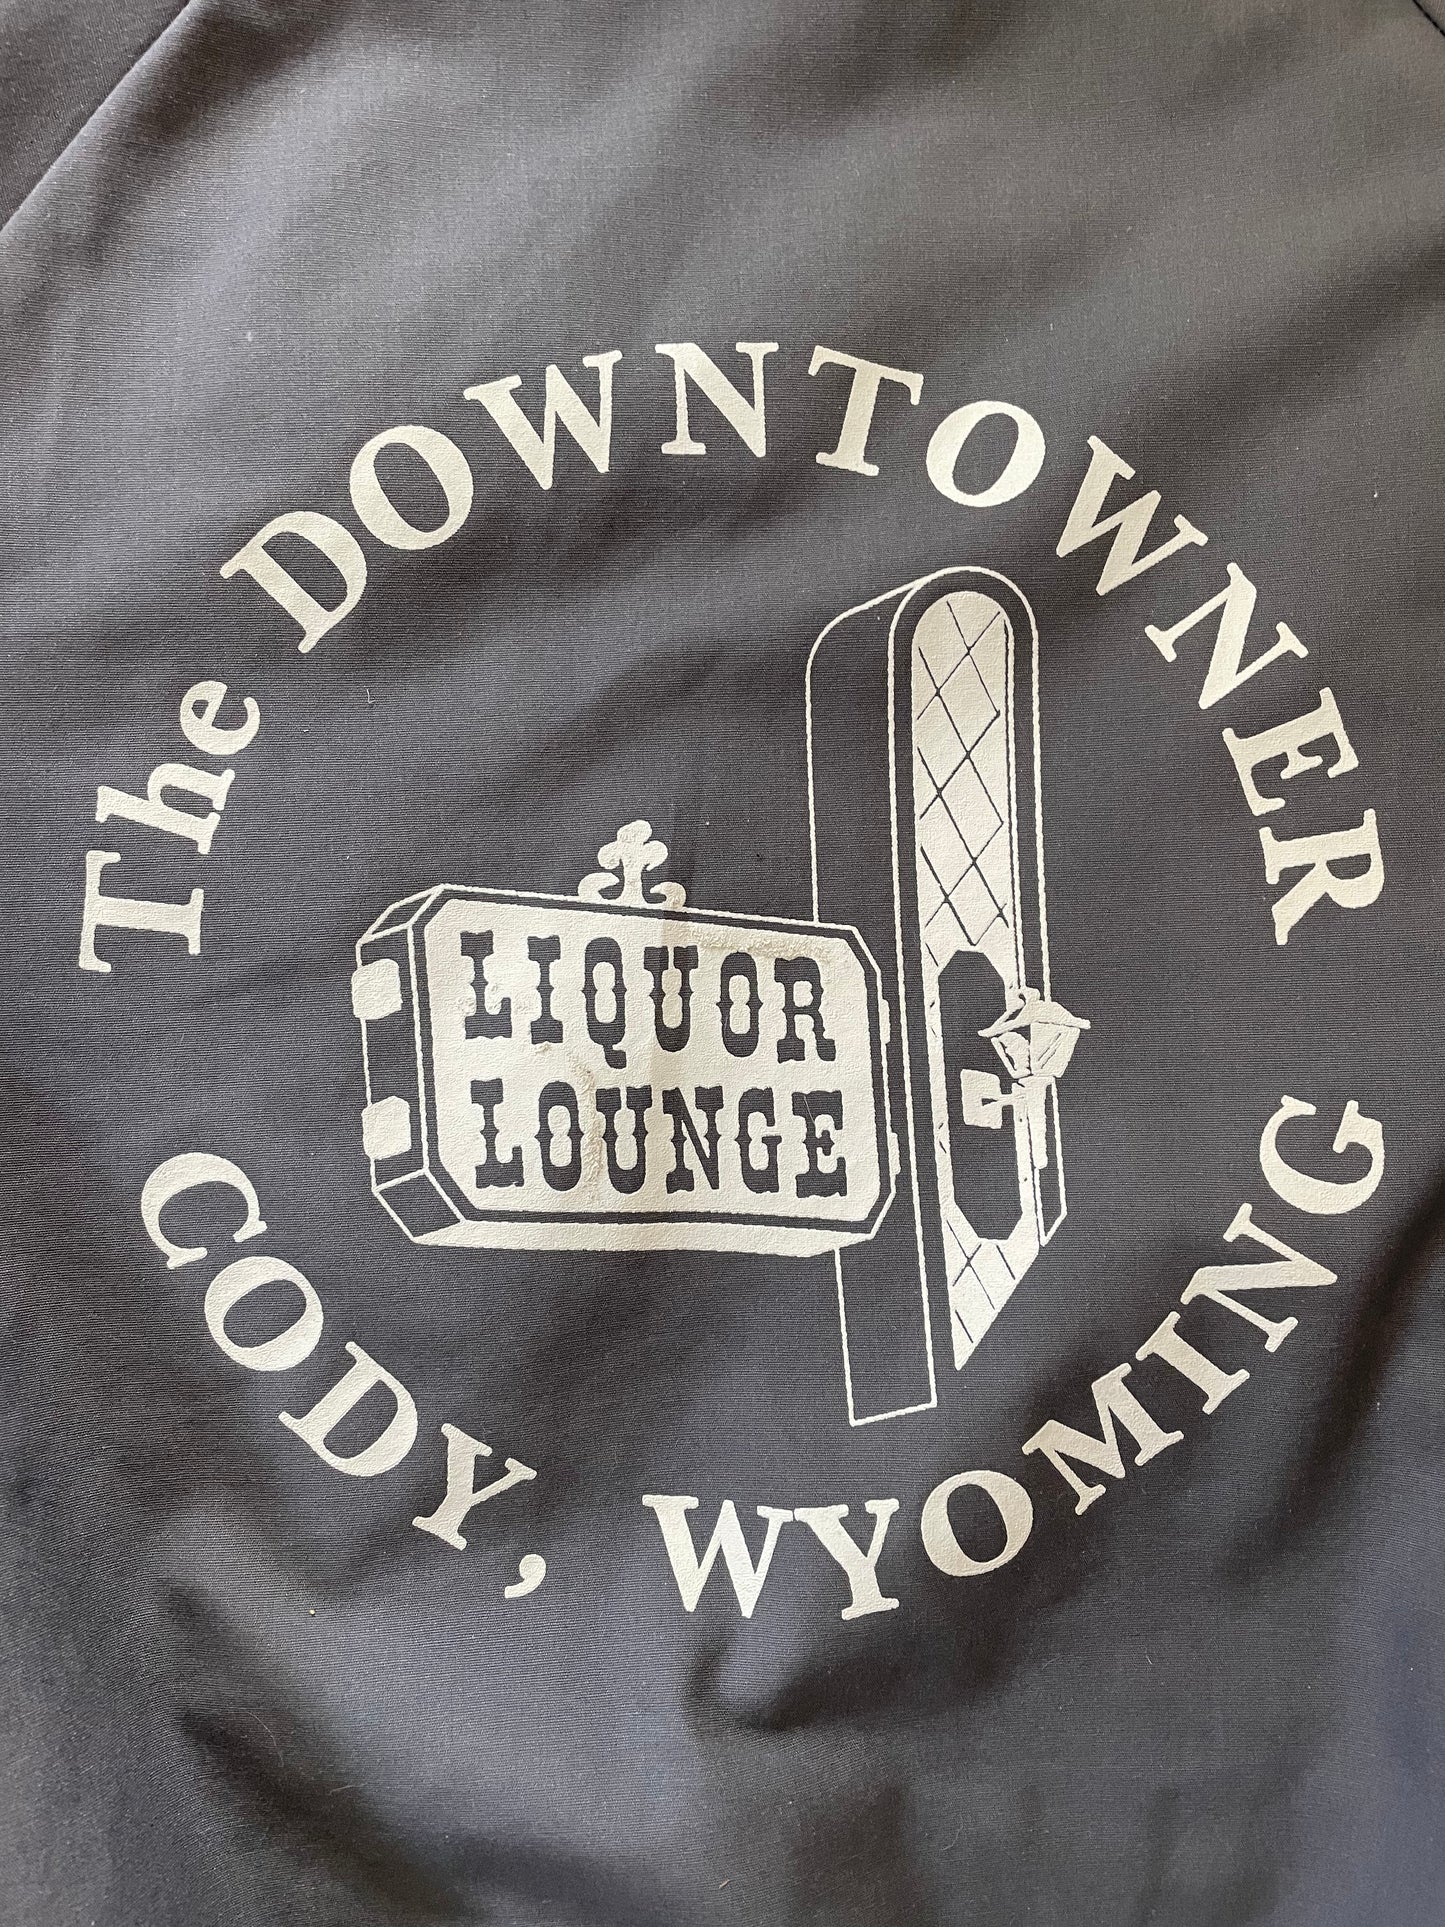 The Downtowner Liquor Lounge Cody, Wyoming Jacket